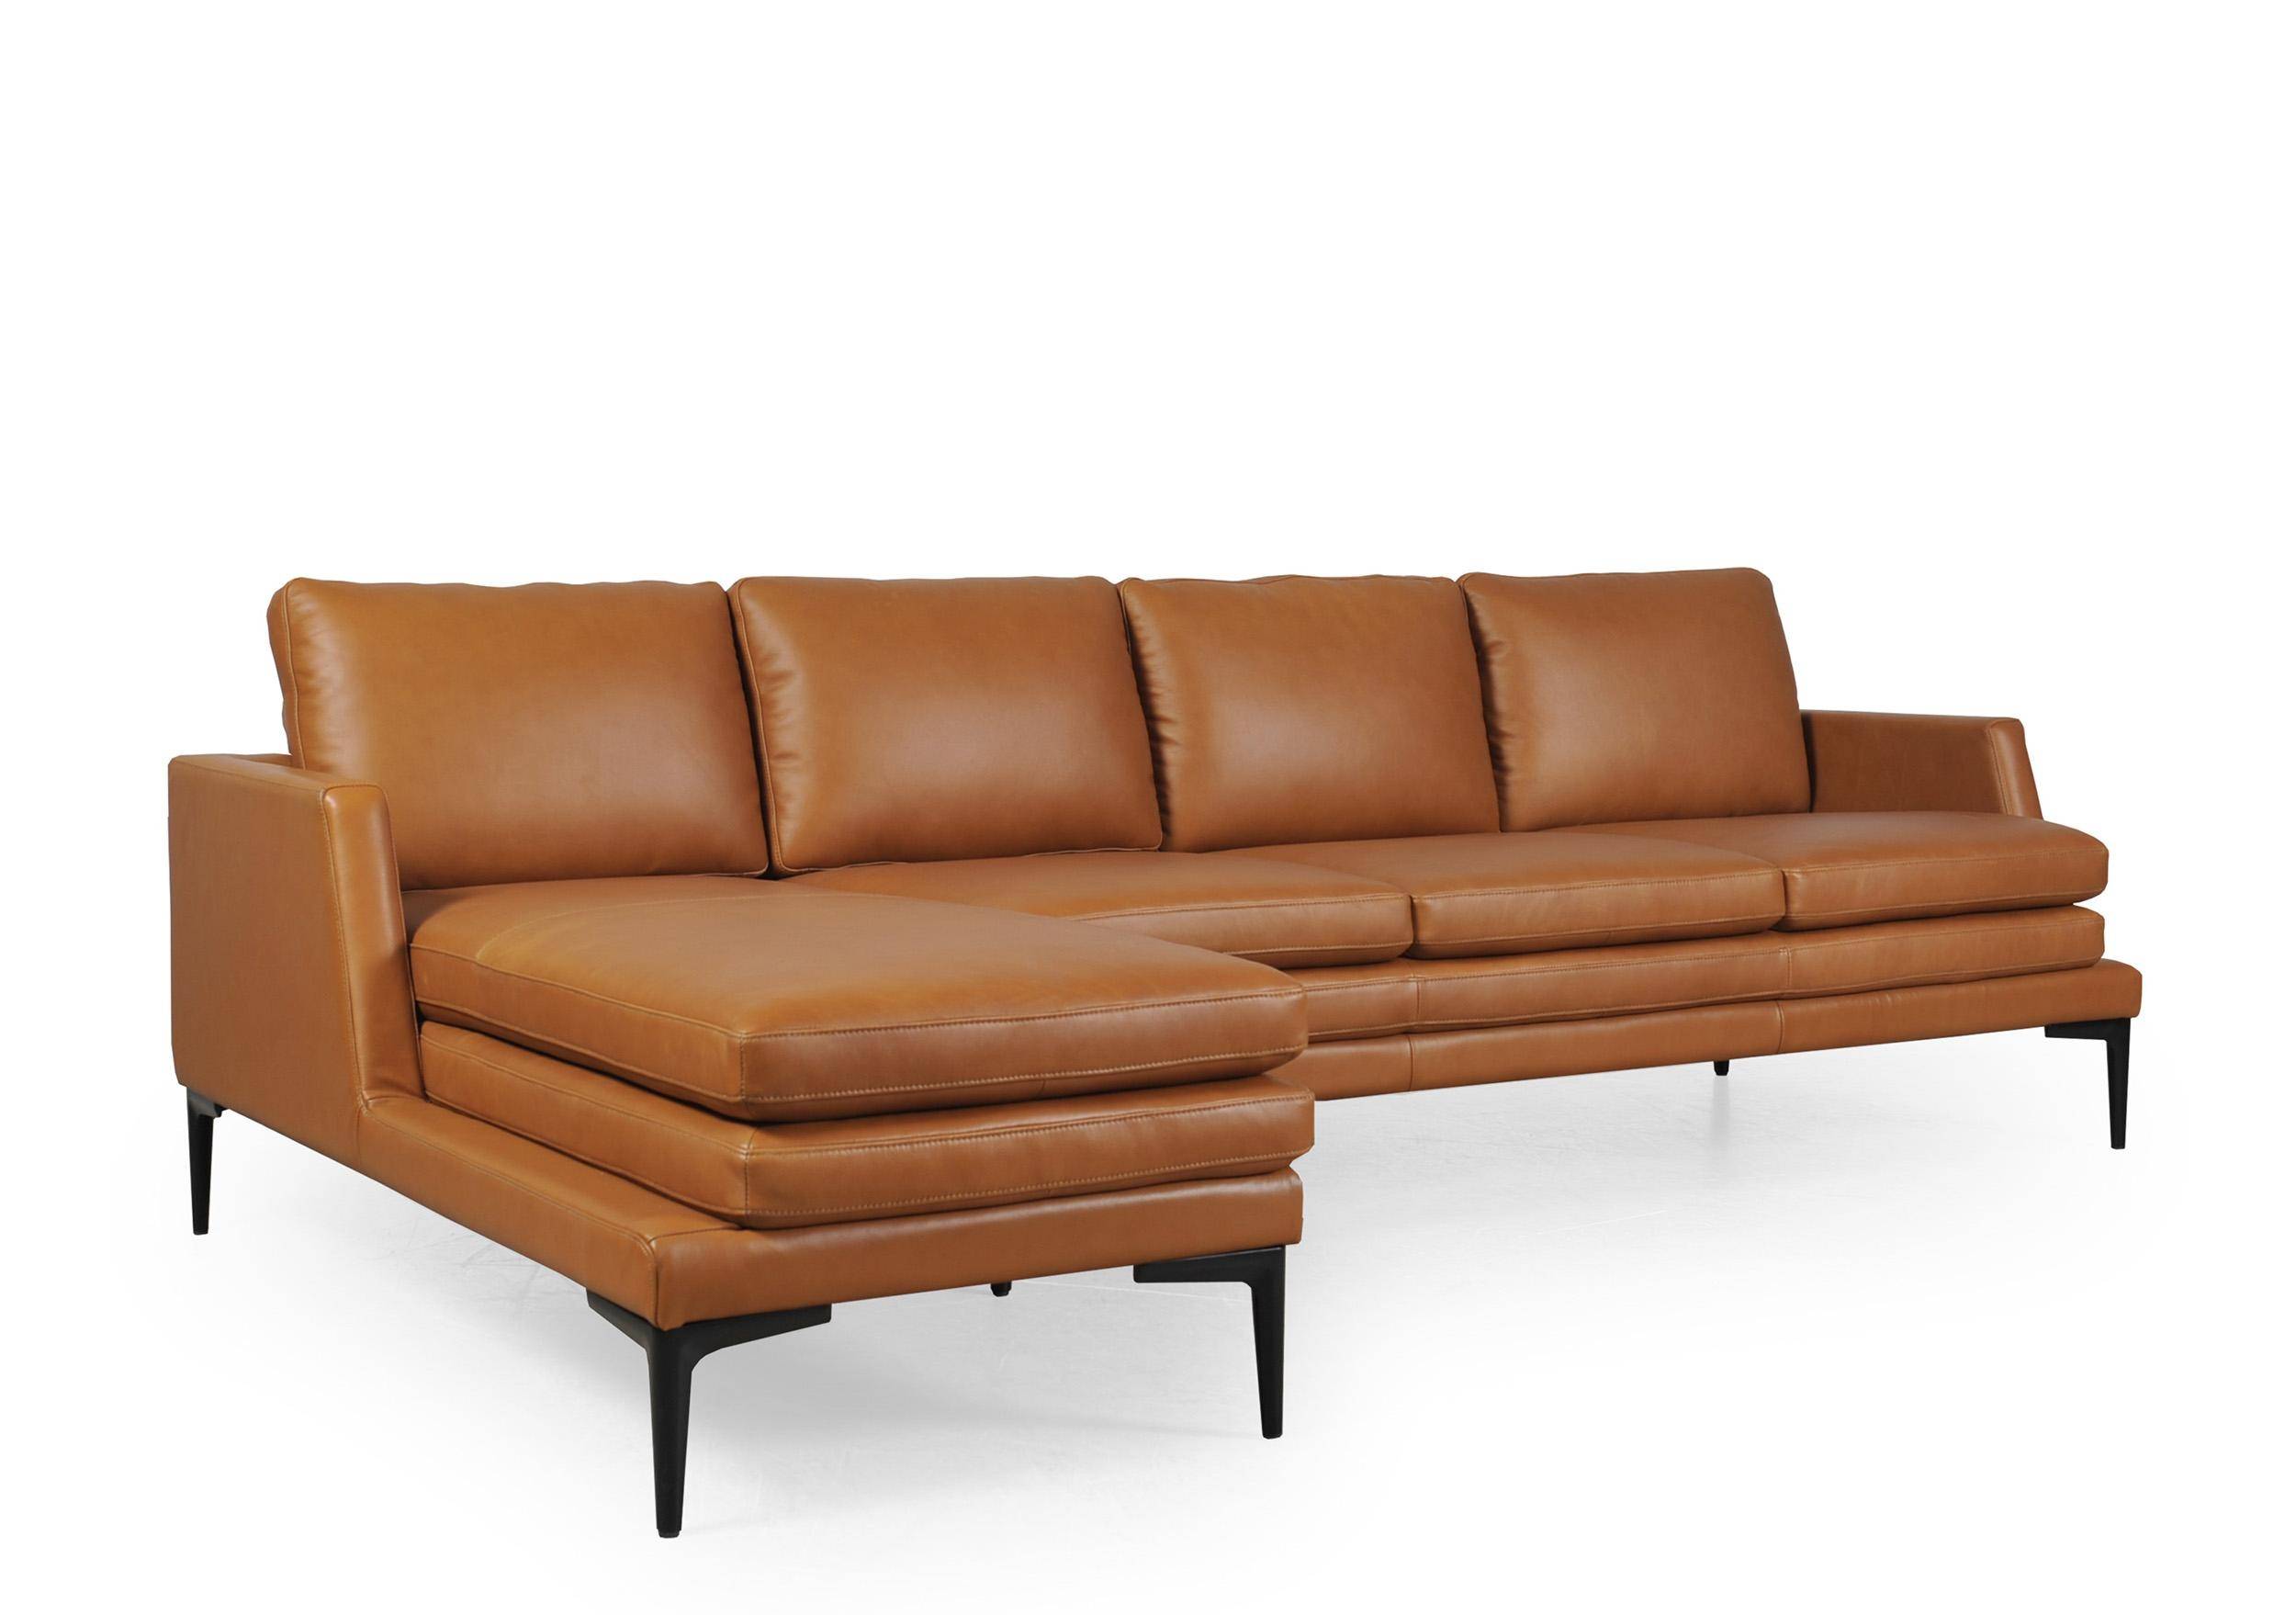 Moroni 439 Rica Sectional Sofa In, Modern Top Grain Leather Sectional Sofa